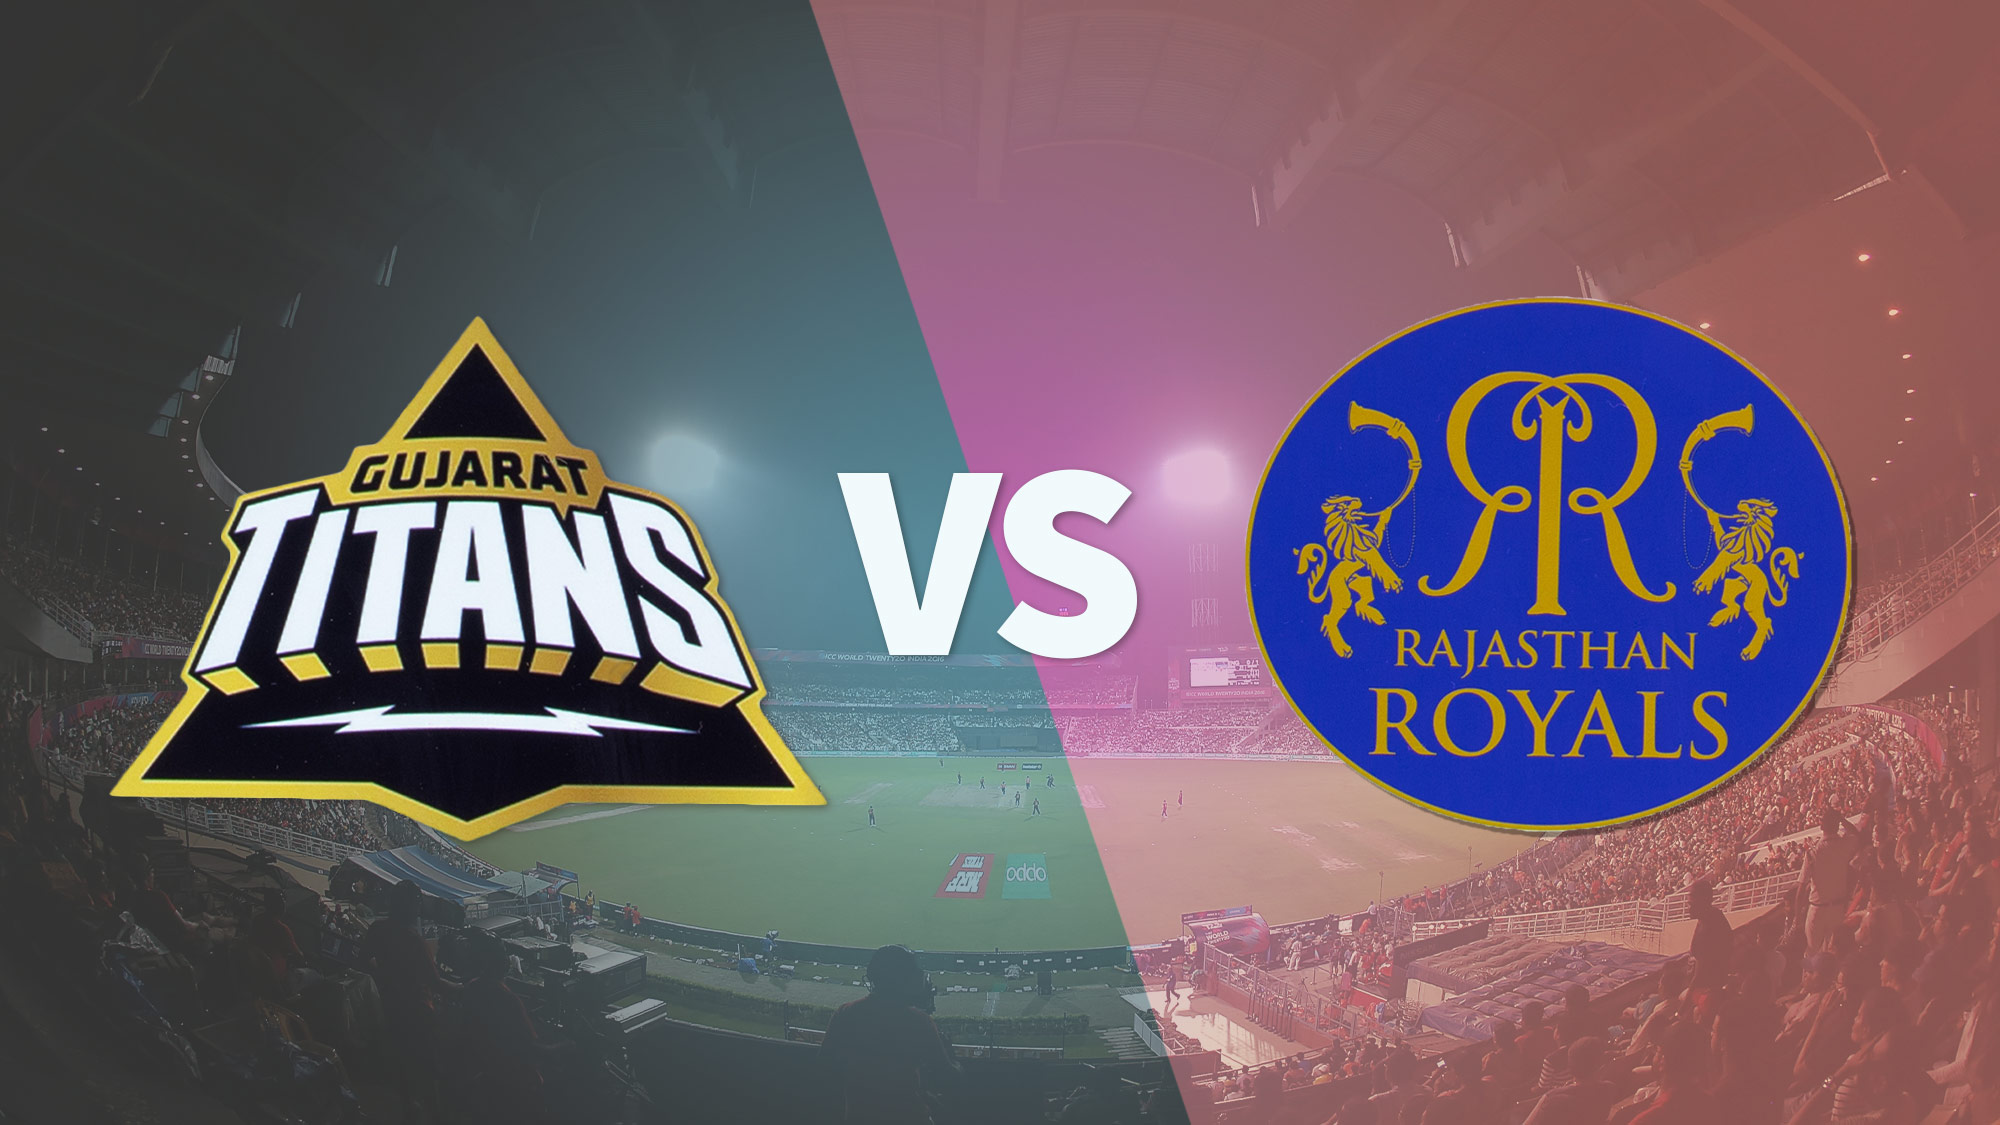 Gujarat Titans vs Rajasthan Royals live stream — how to watch IPL 2022 final online